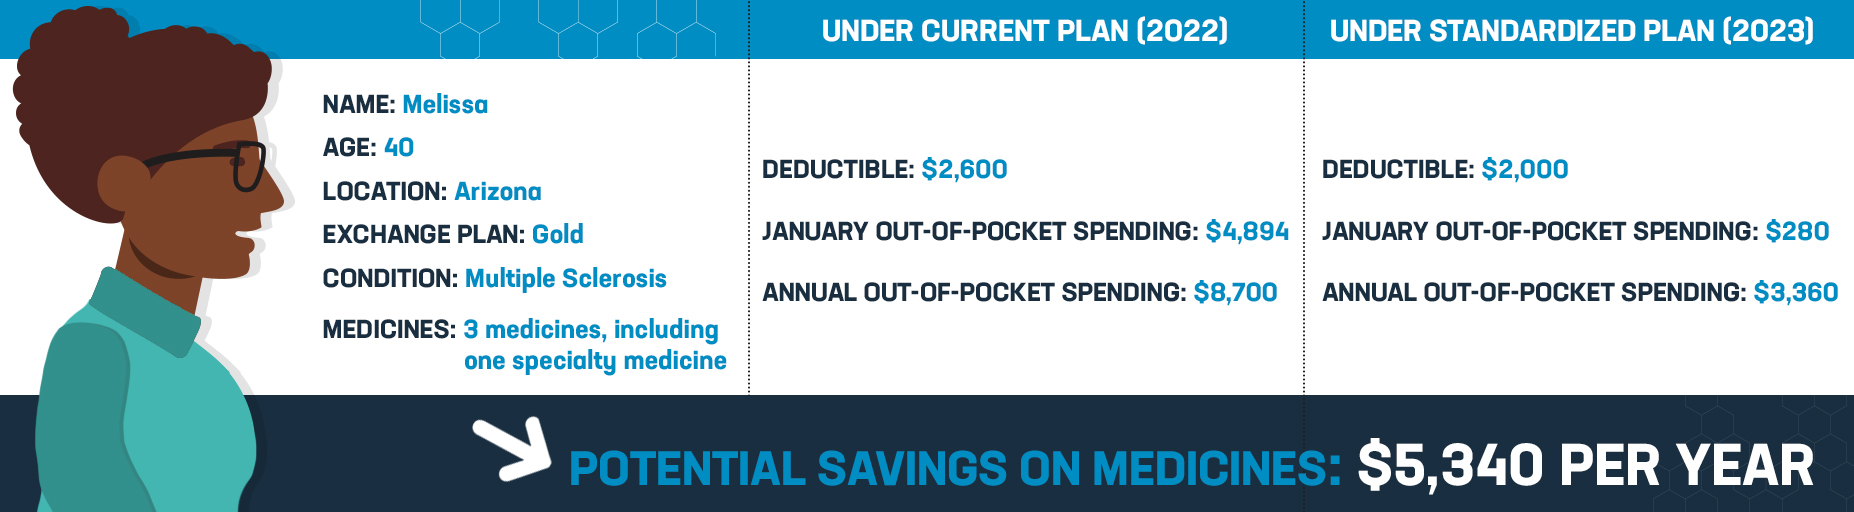 Potential Savings Graphic Melissa_v3